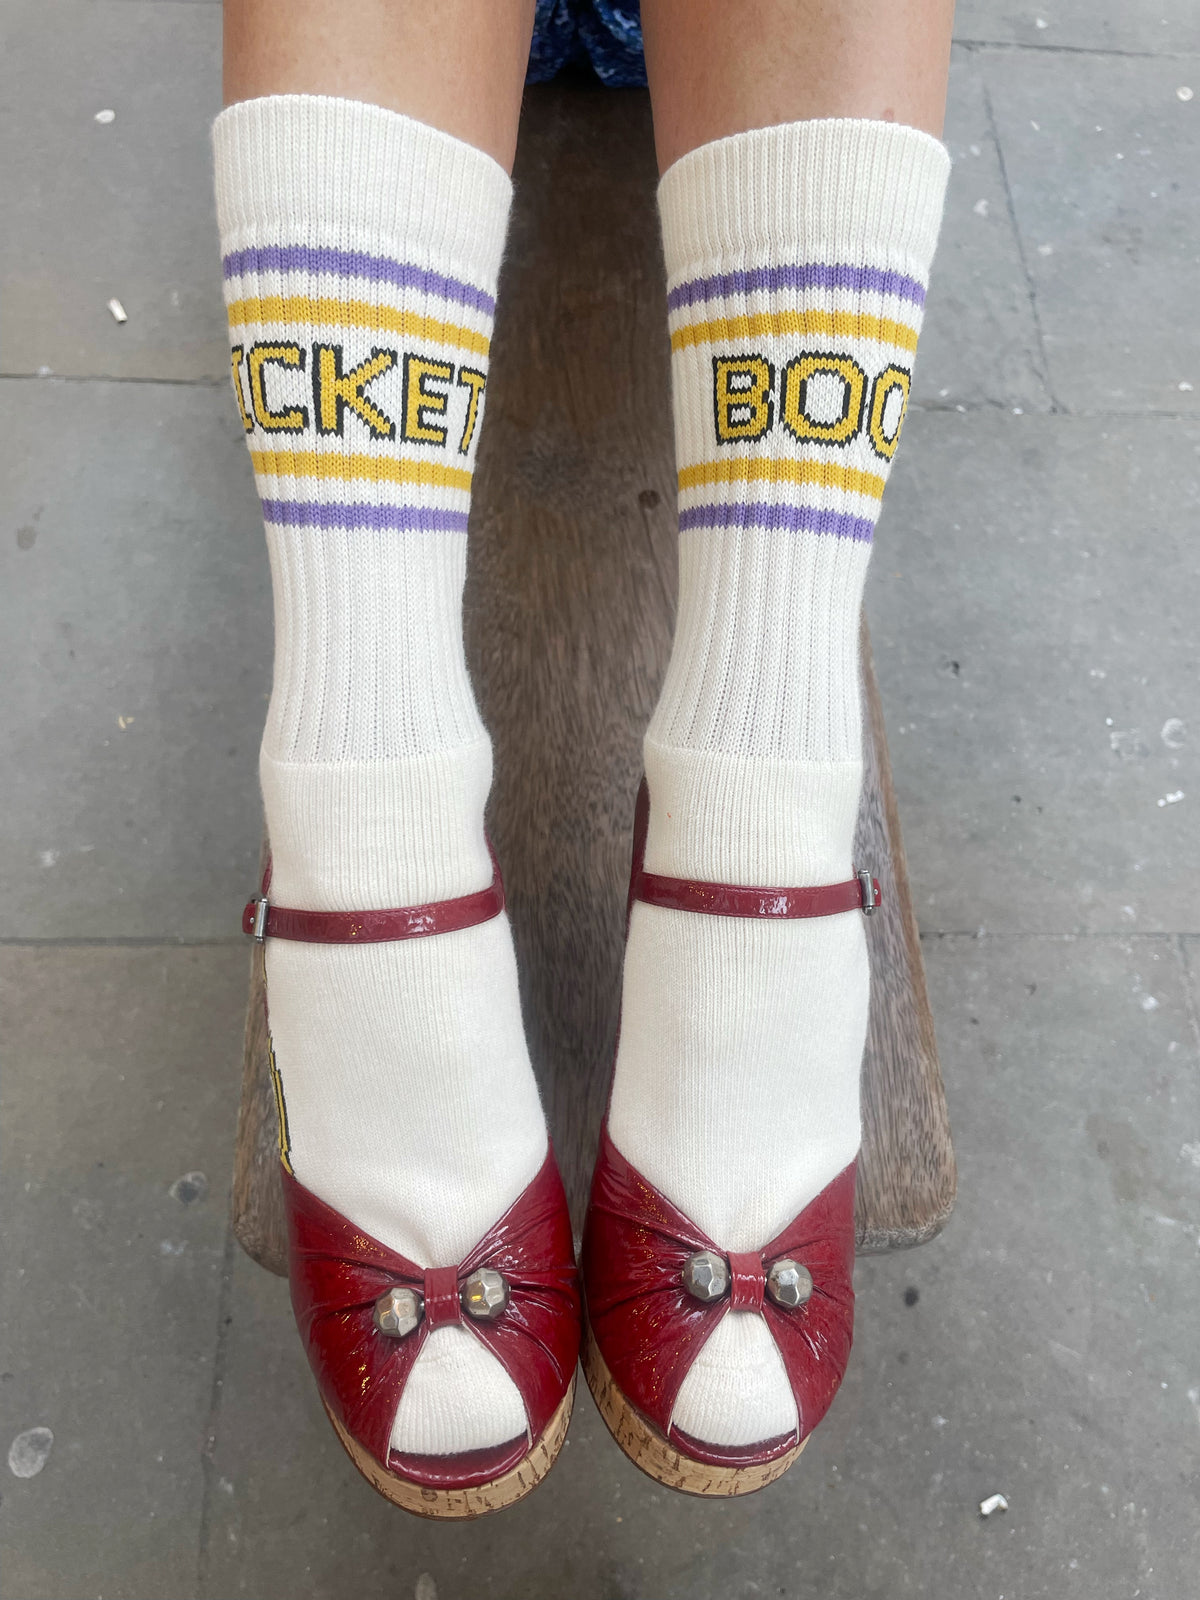 Quintessentially British Socks